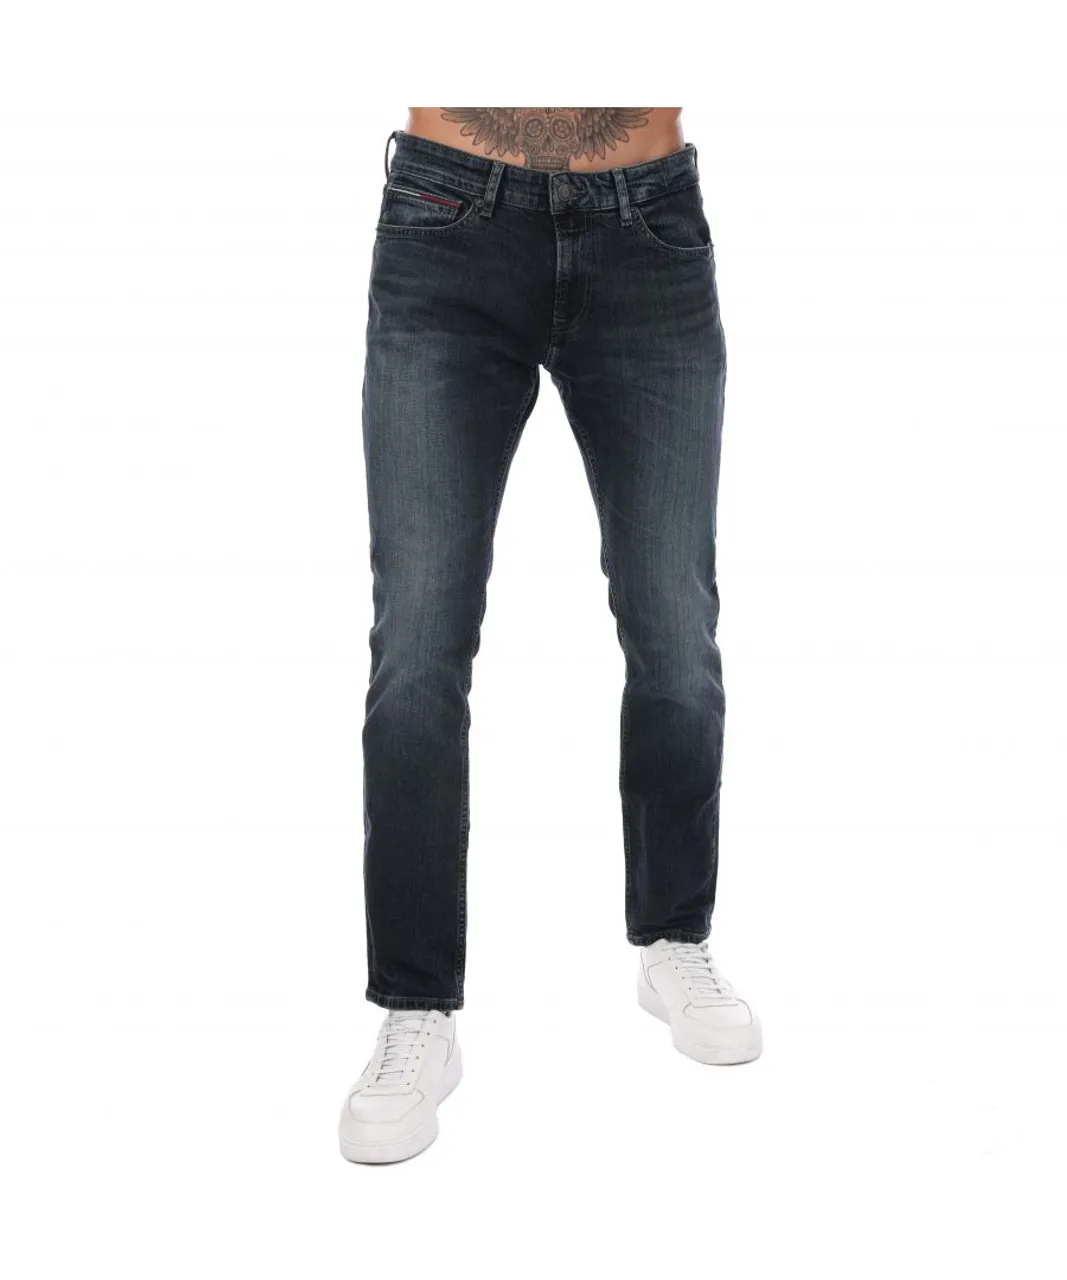 Tommy Hilfiger Mens Scanton Slim Fit Jeans in Black Cotton